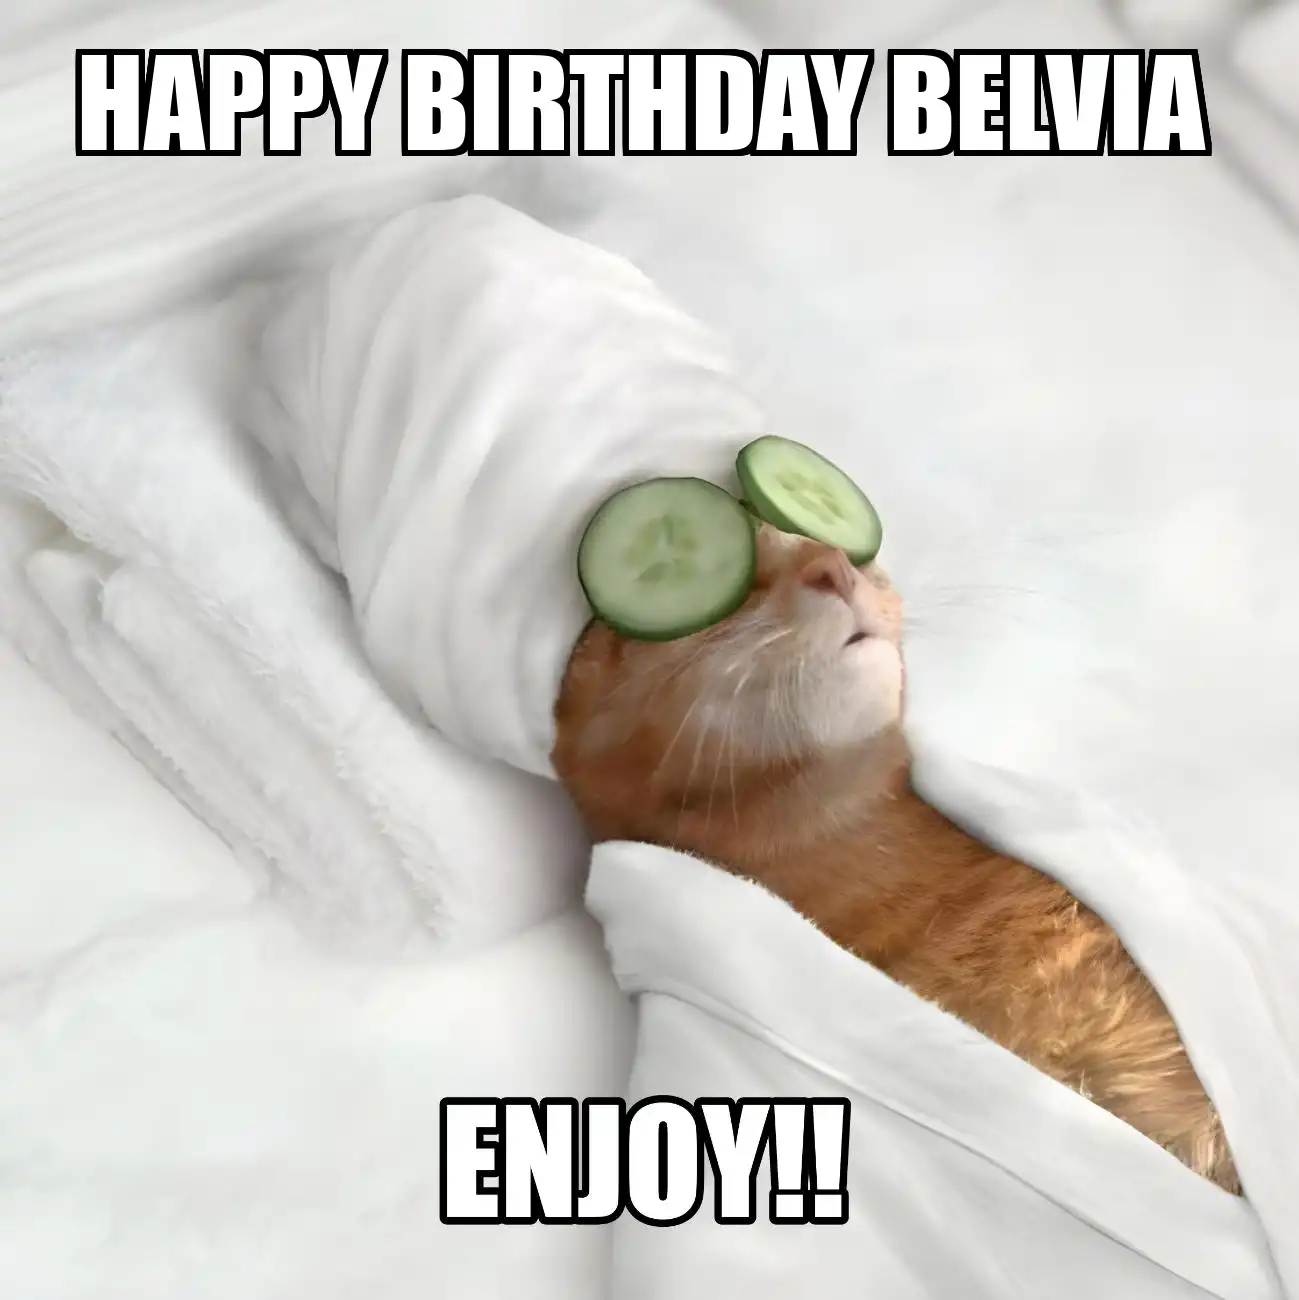 Happy Birthday Belvia Enjoy Cat Meme